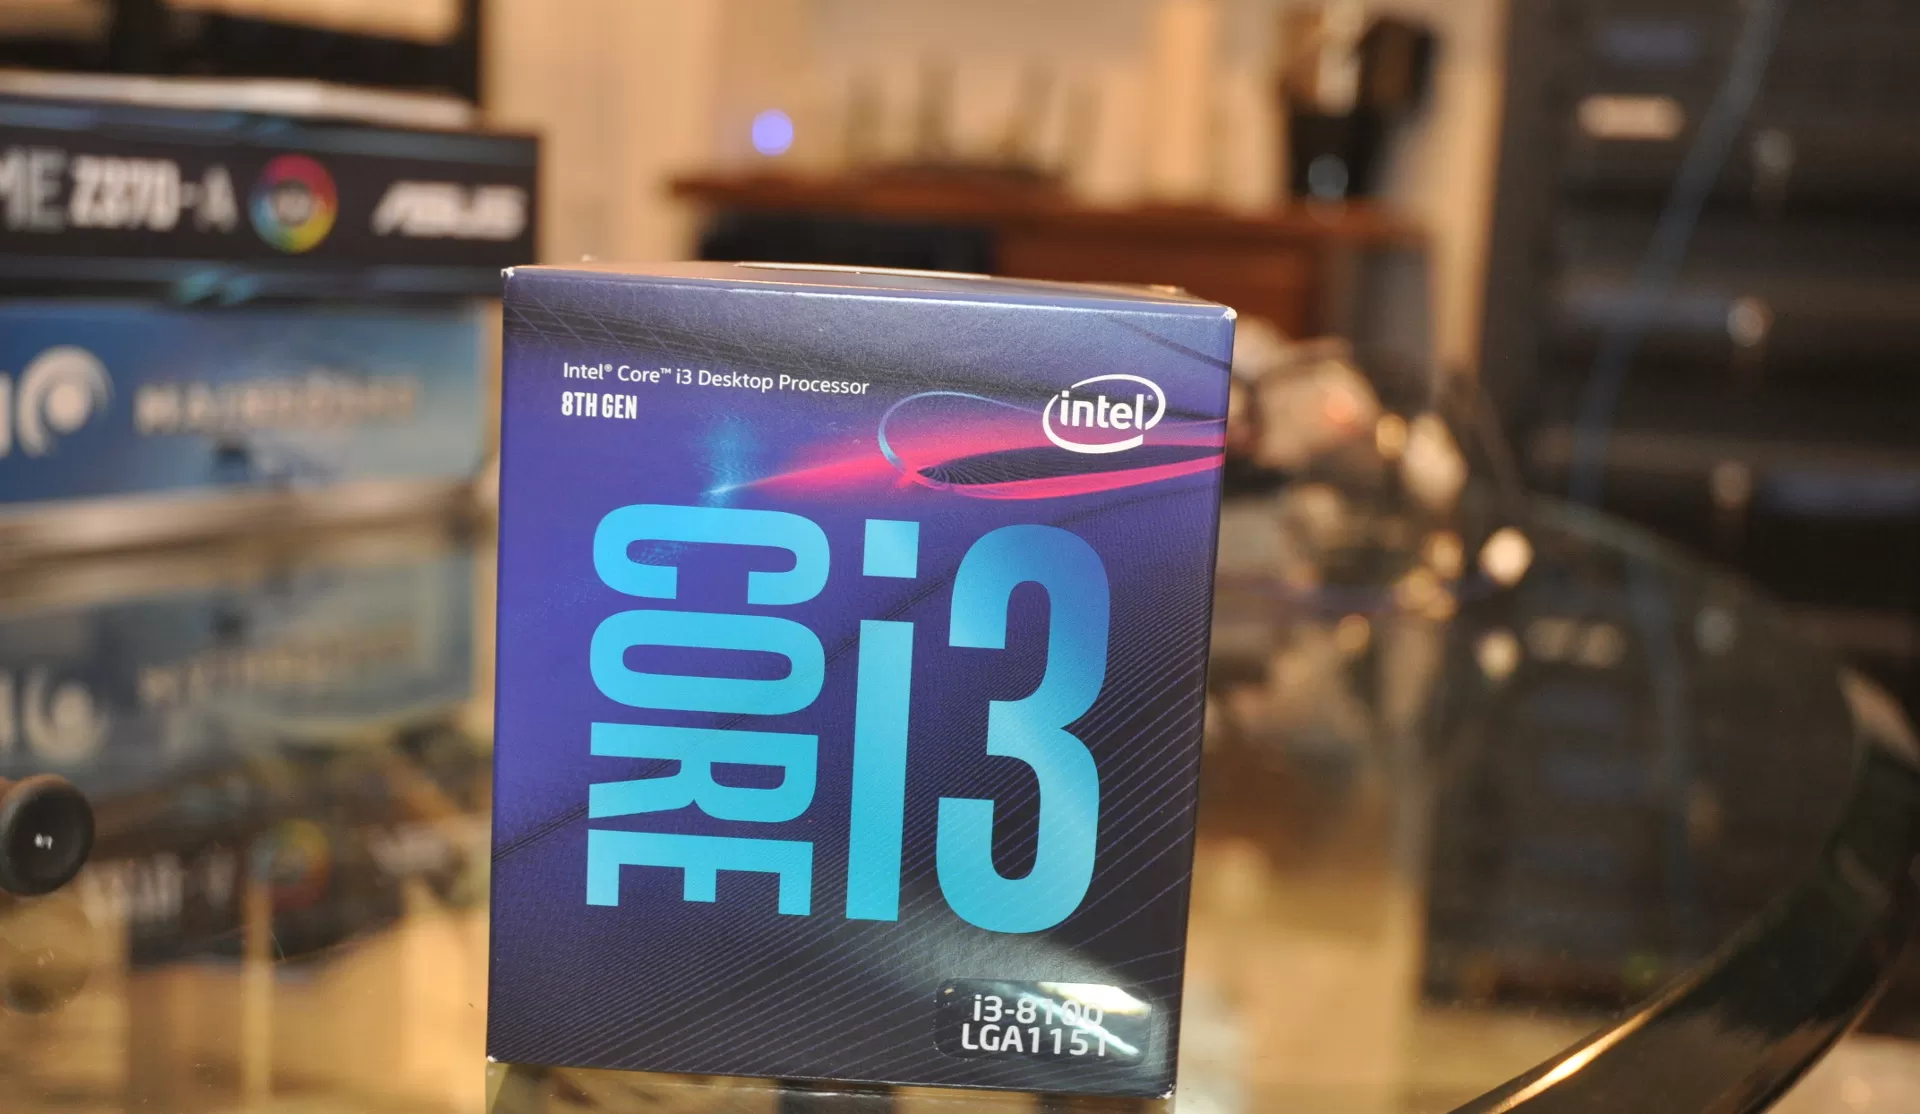 Intel Core i3-8100. ПК Intel Core i3 8100. Core i7 UHD. Intel(r) Core(TM) i3-8100 CPU @ 3.60GHZ 3.60 GHZ. Интел 8100